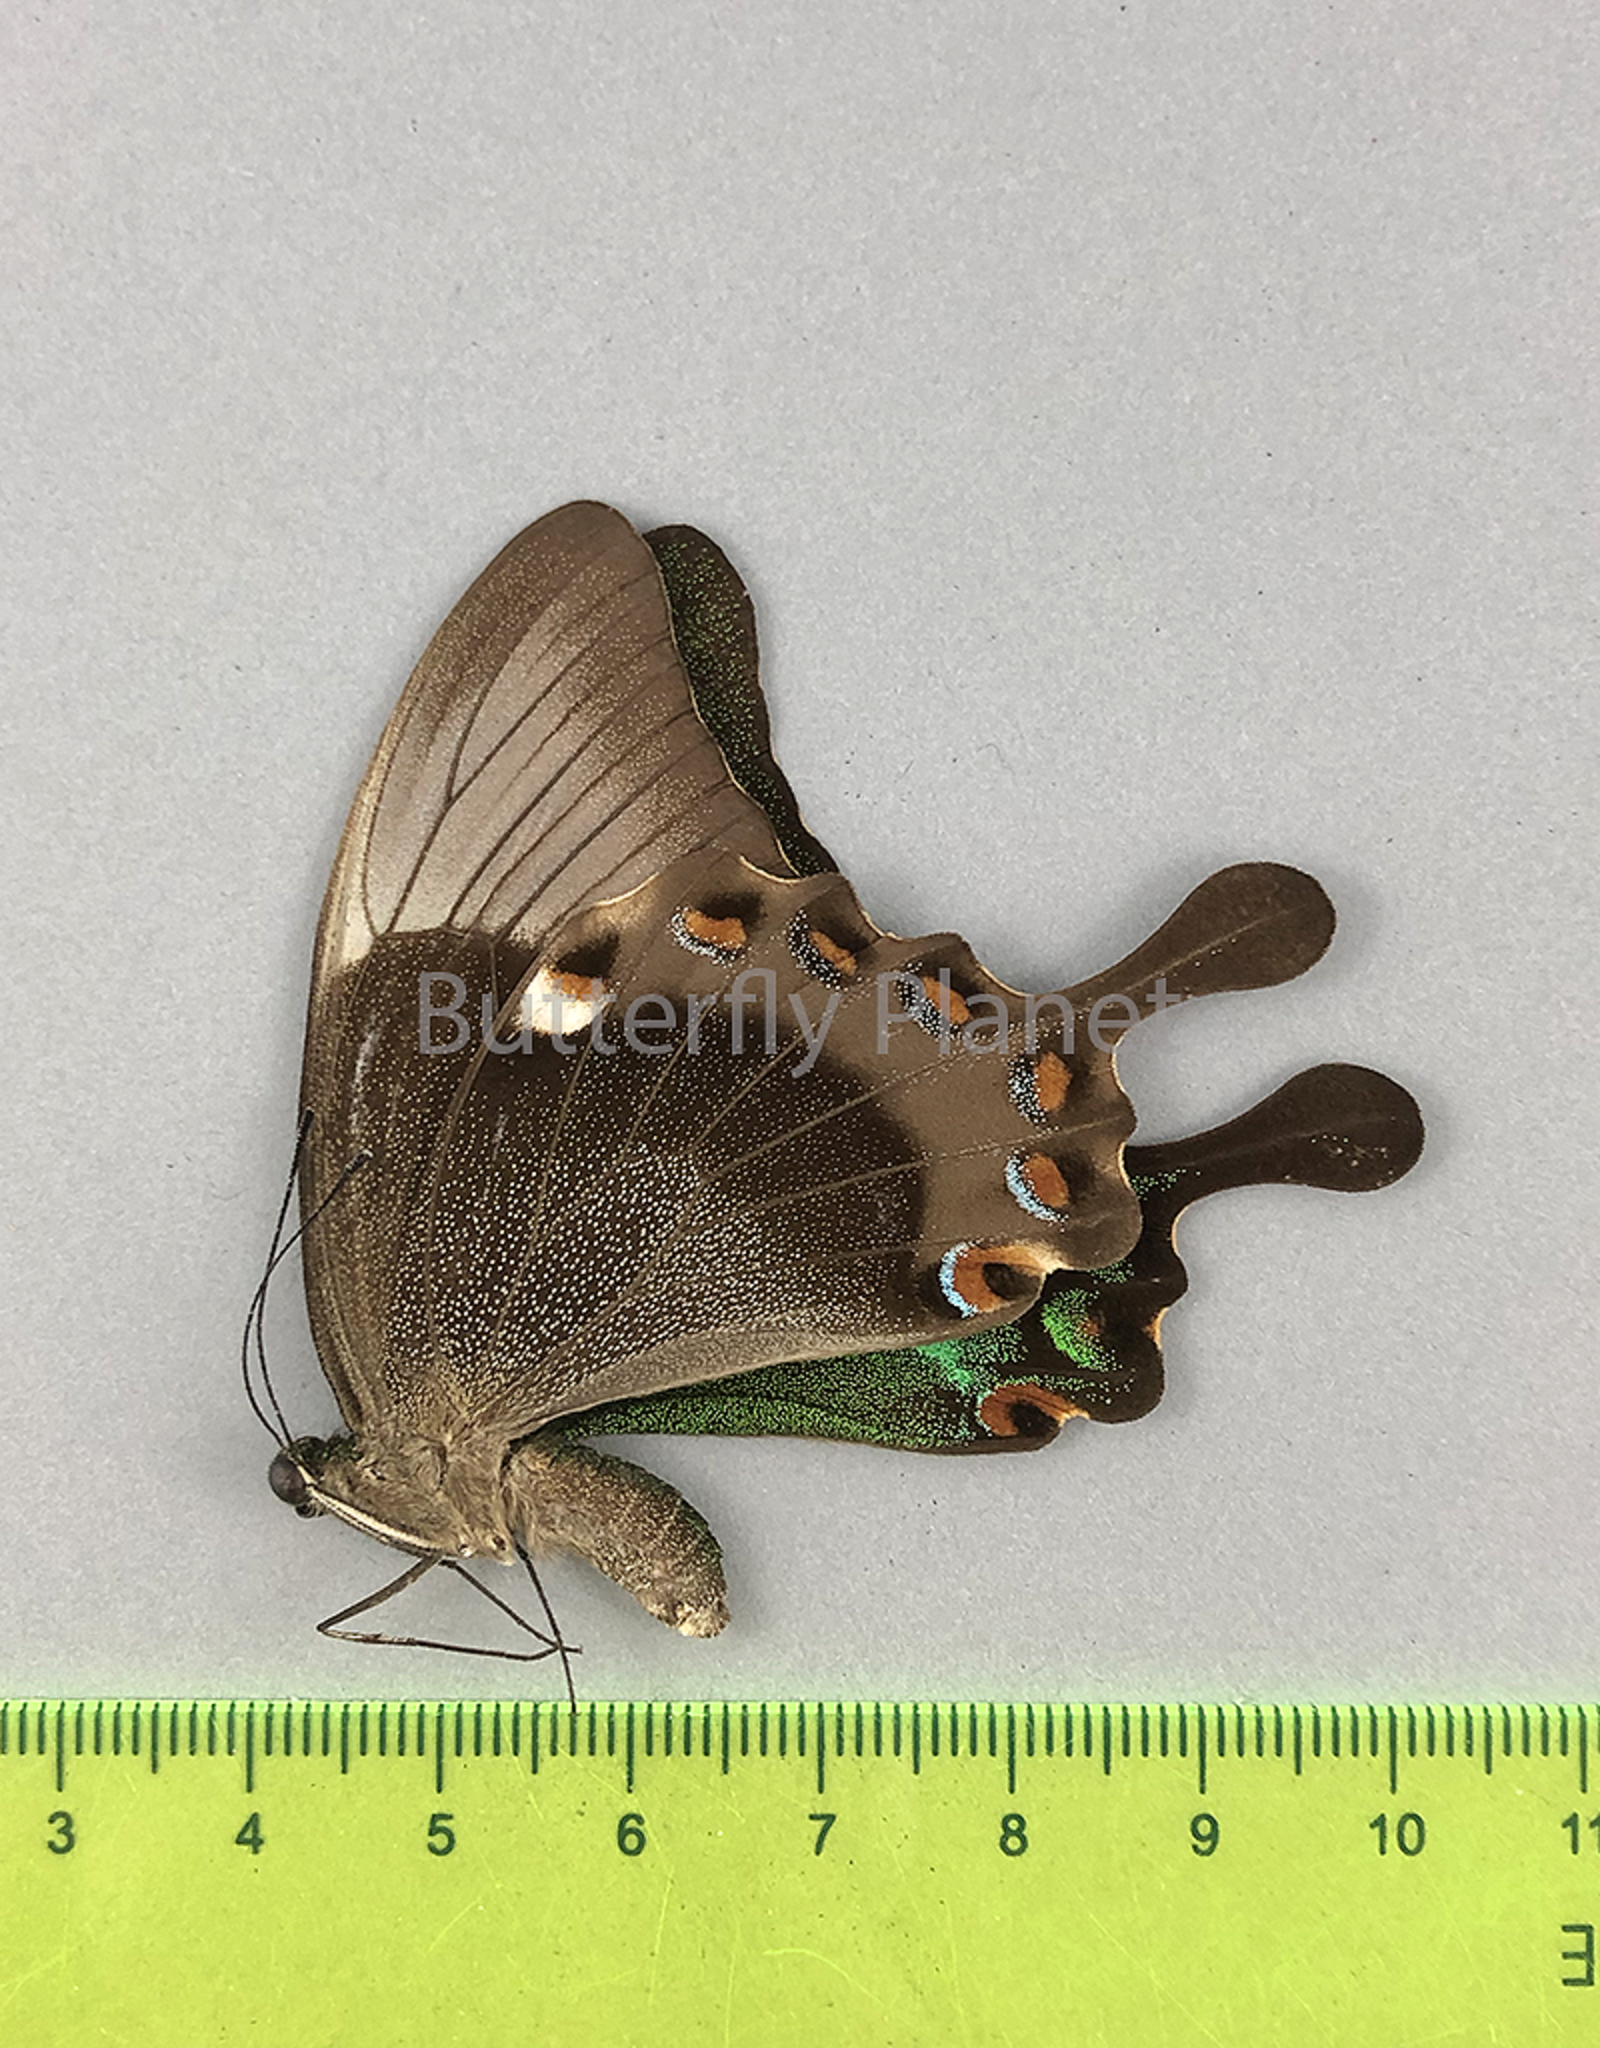 Papilio palinurus daedalus F A1/A1- Marinduque, Phillipines